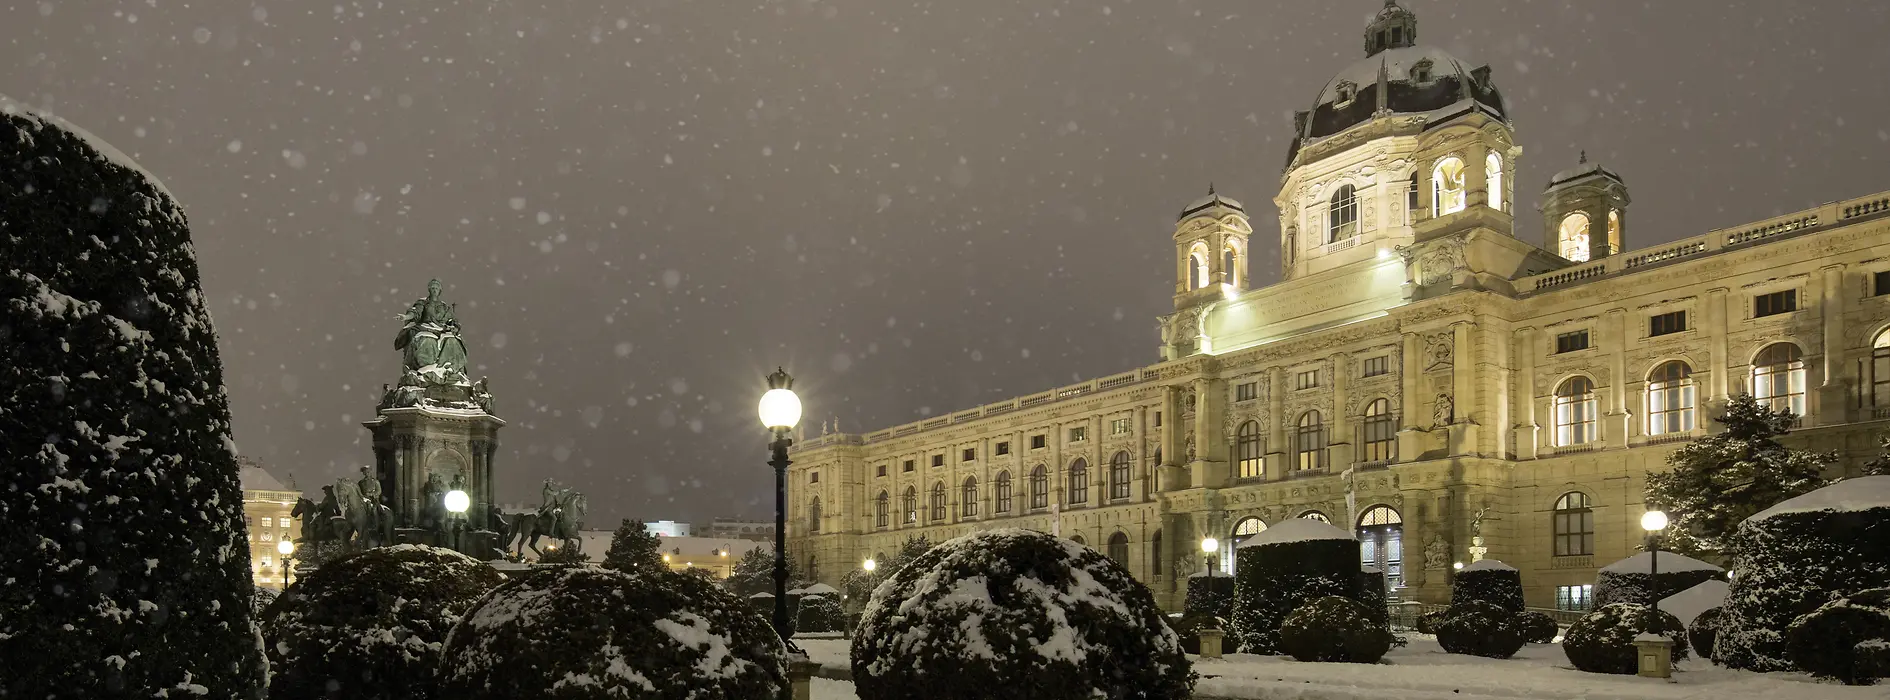 Muzeum Historii Naturalnej zimą z opadami śniegu